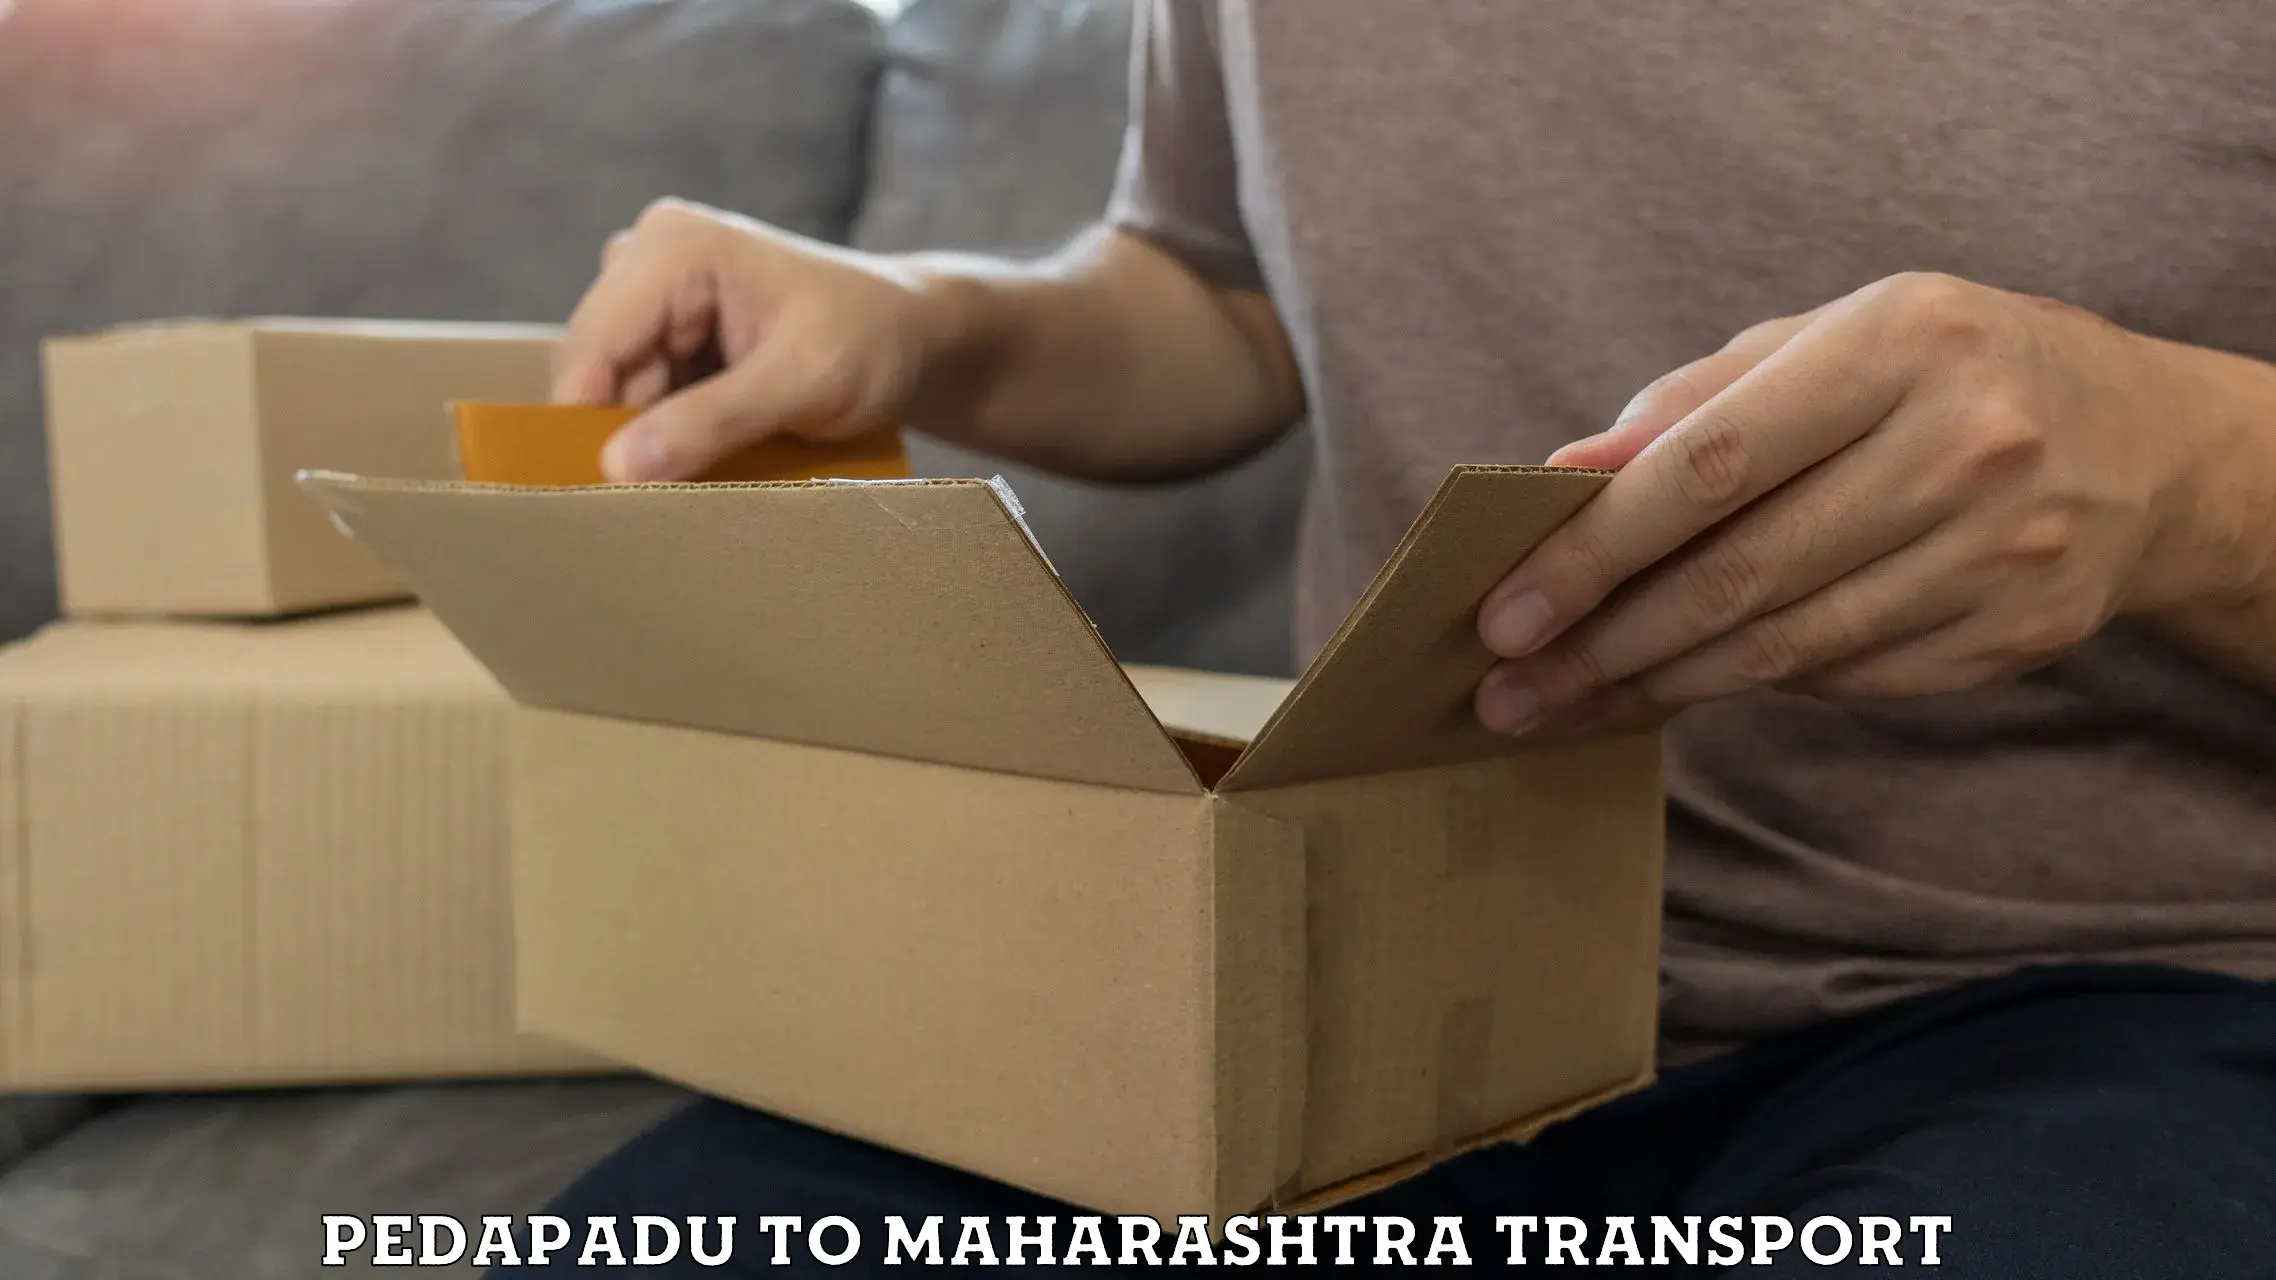 Truck transport companies in India Pedapadu to Maharashtra